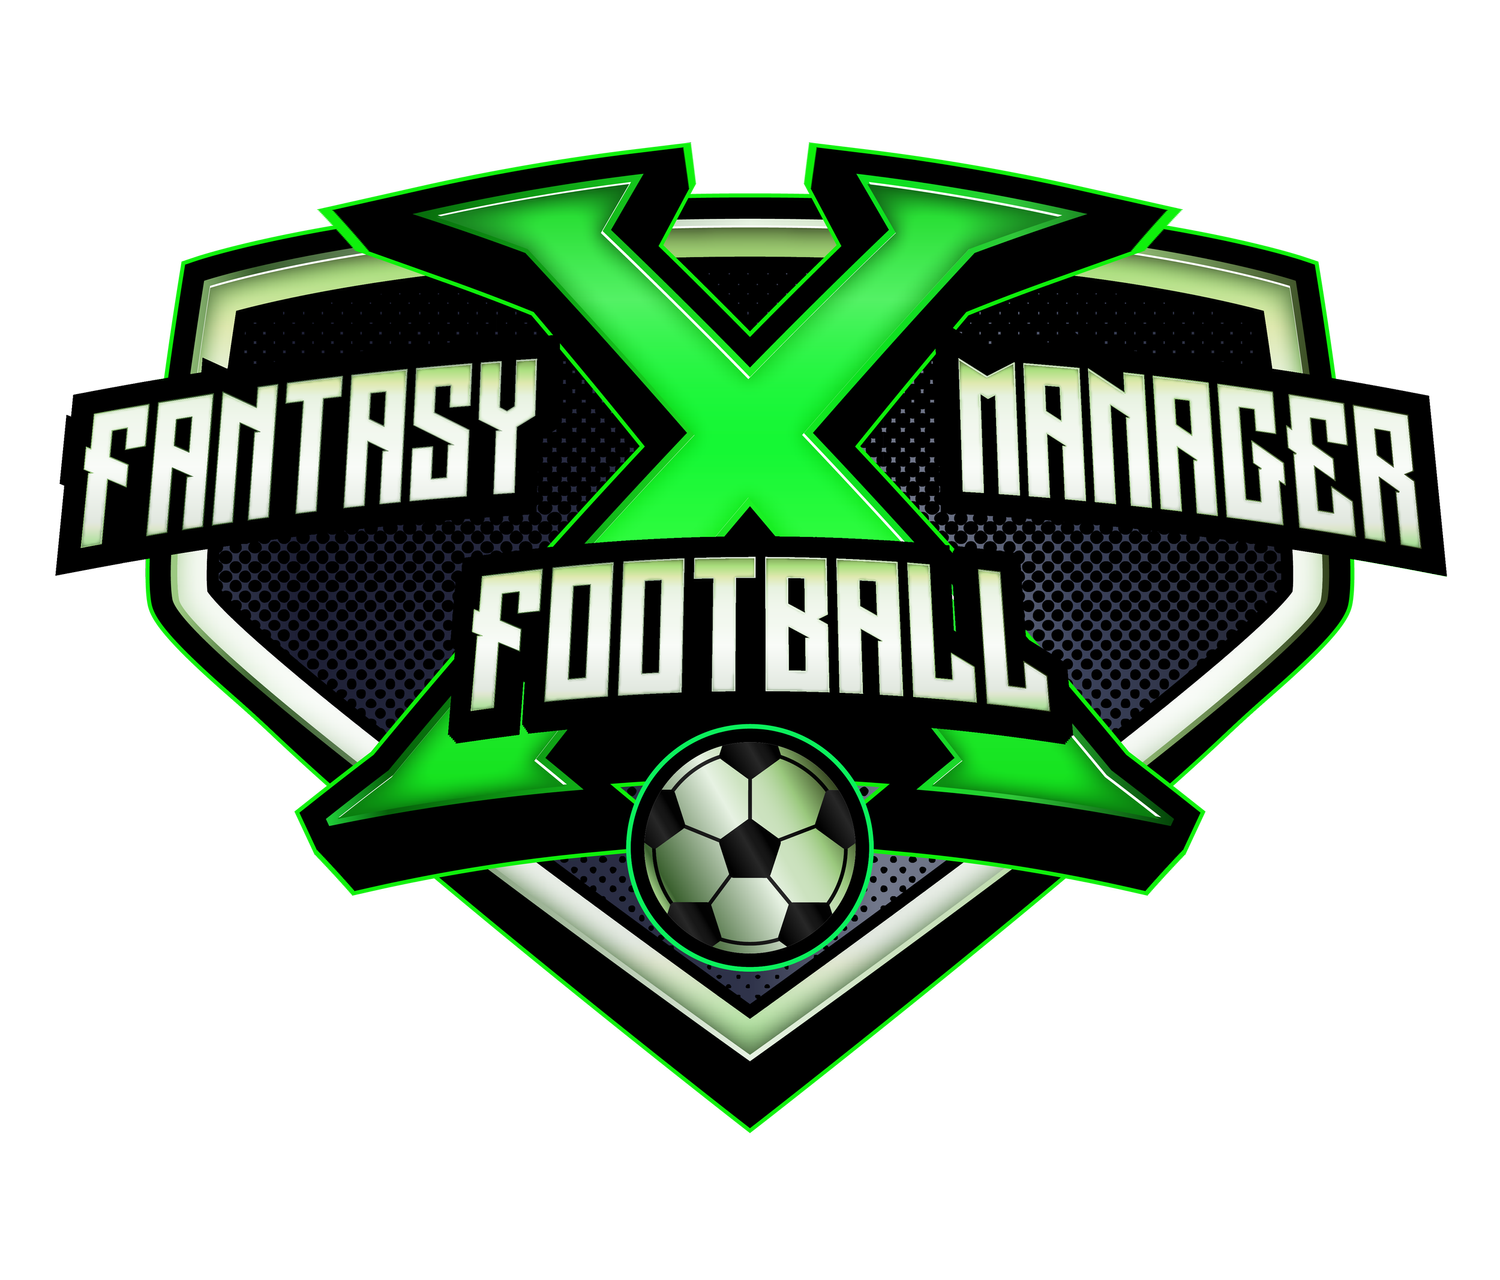 Fantasy Manager Football X